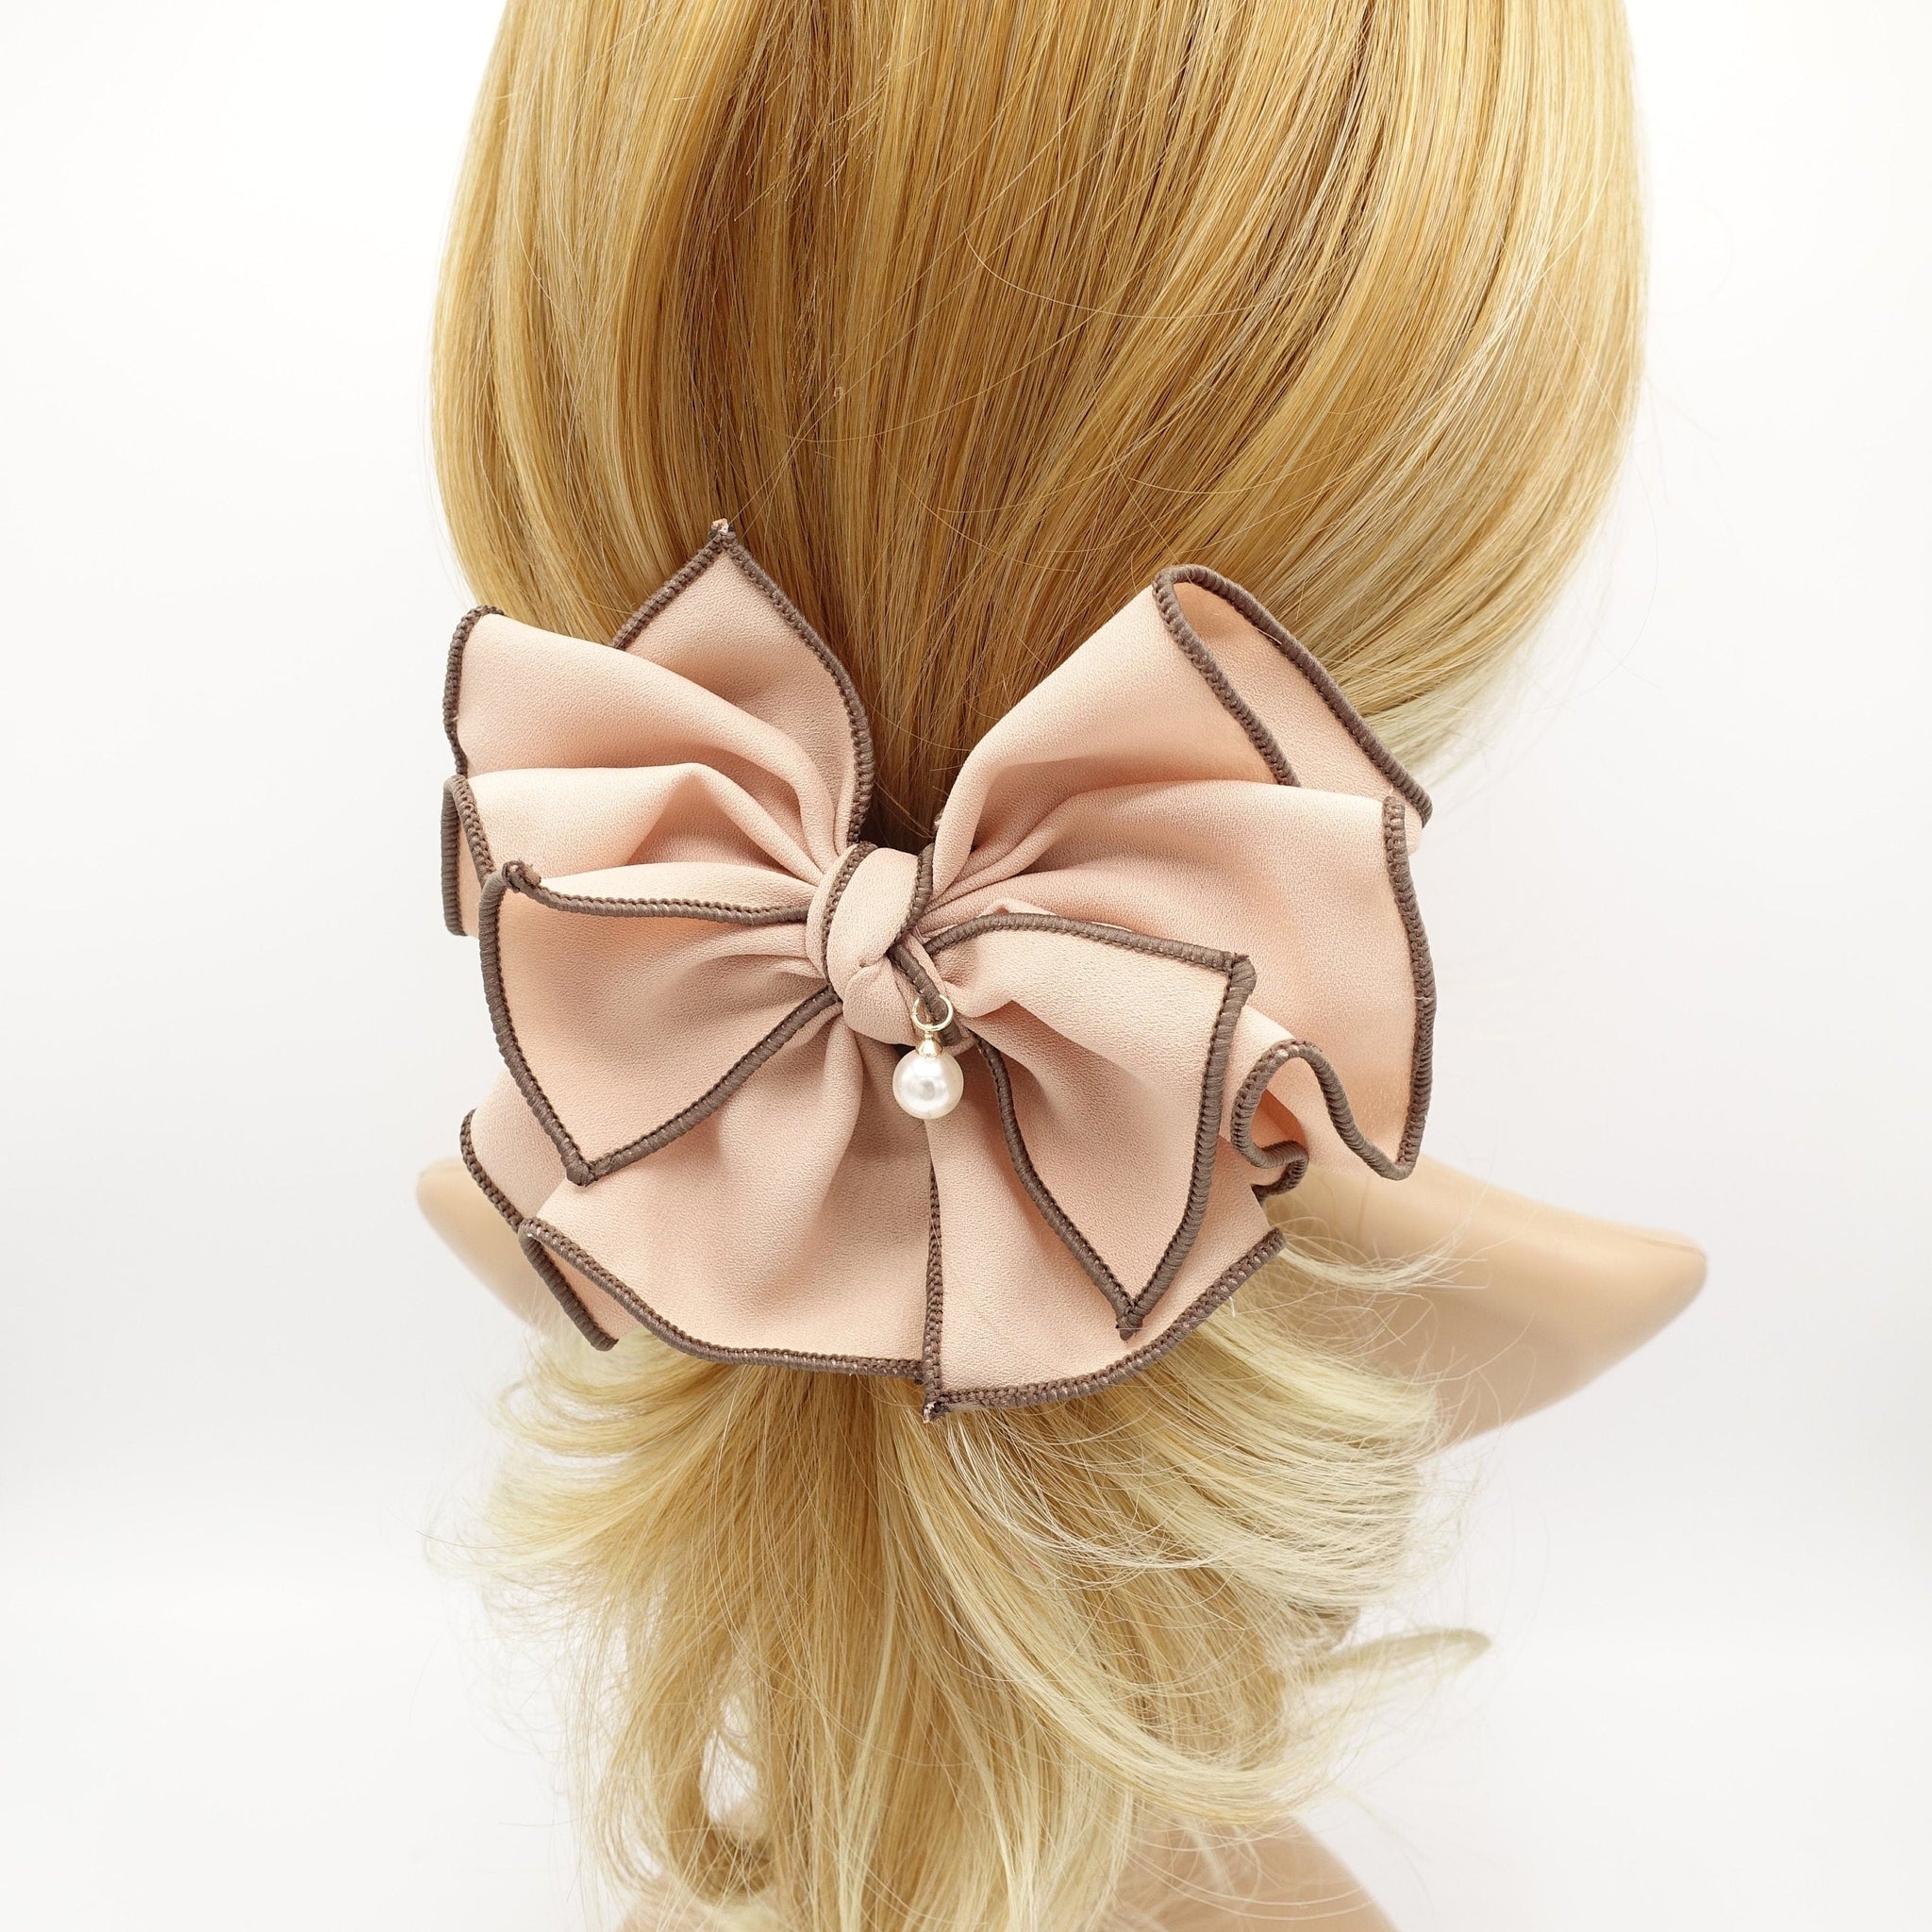 veryshine.com Barrette (Bow) Peach beige double colored edge hair bow pleated women hair accessory